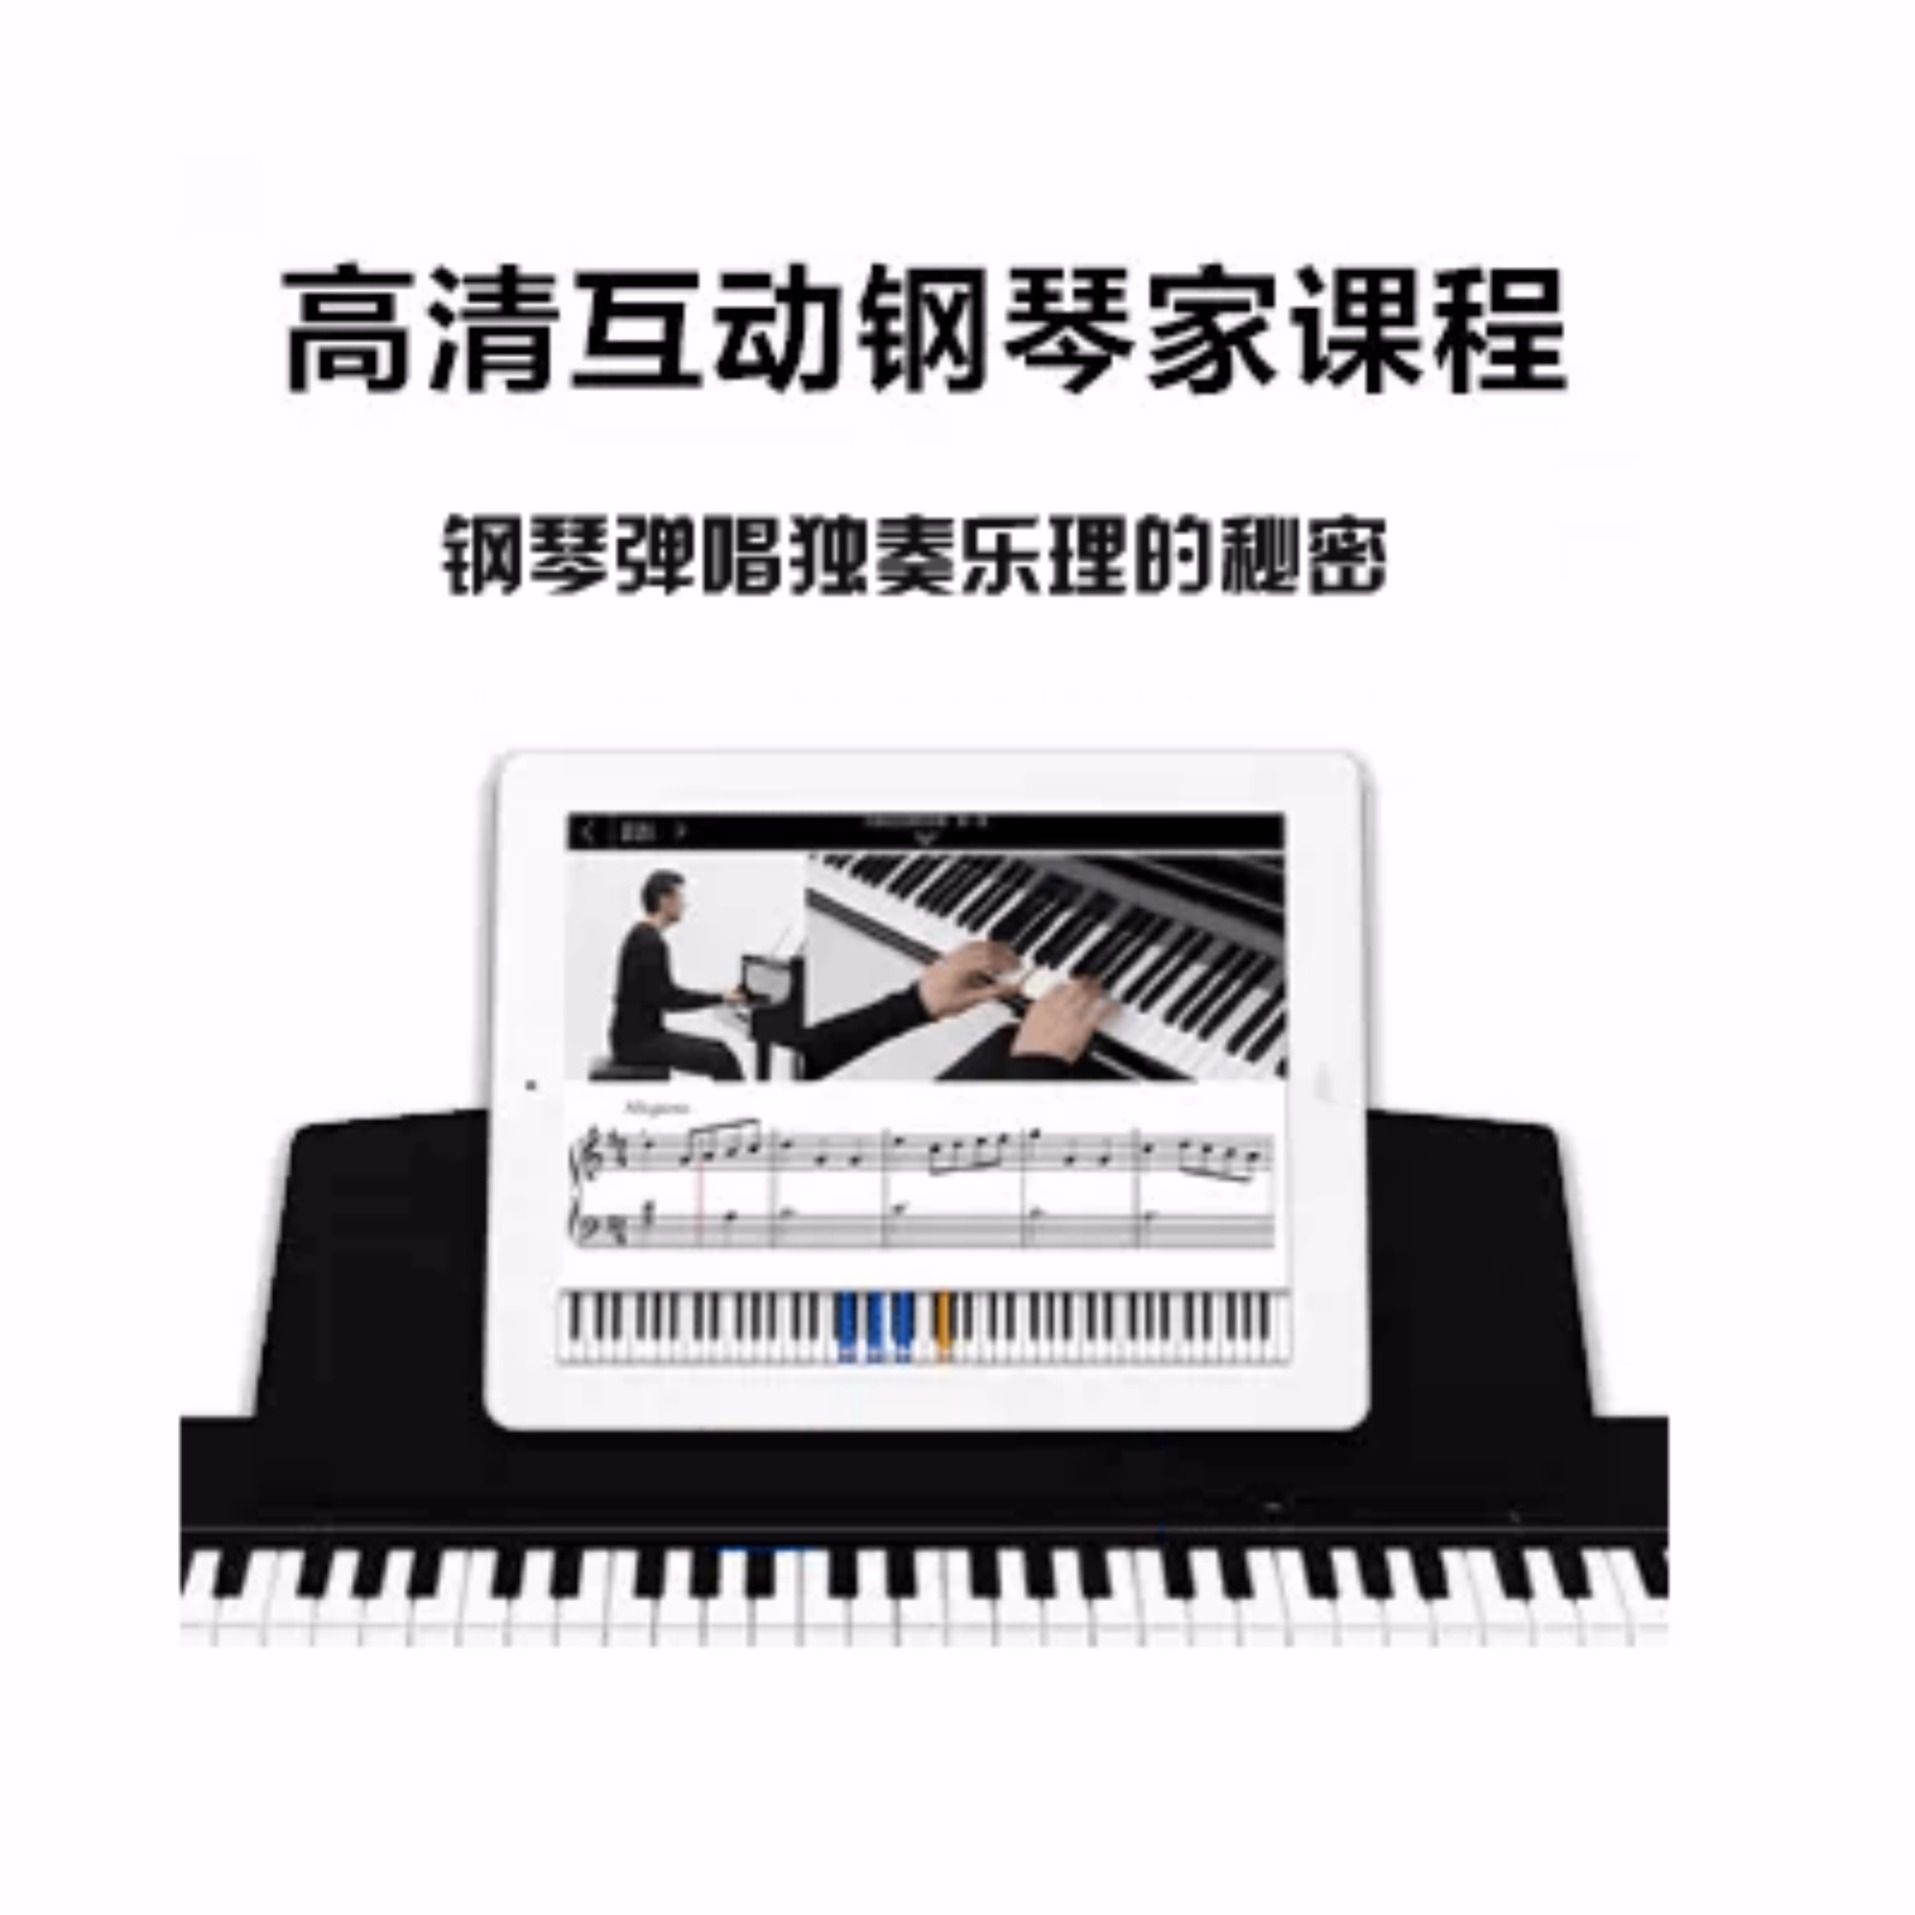 27177a9f bf0c 4e48 be12 0df45d596345 - 陈俊宇 钢琴弹唱 独奏 乐理 的秘密 送爵士钢琴伴奏大全 视频教程